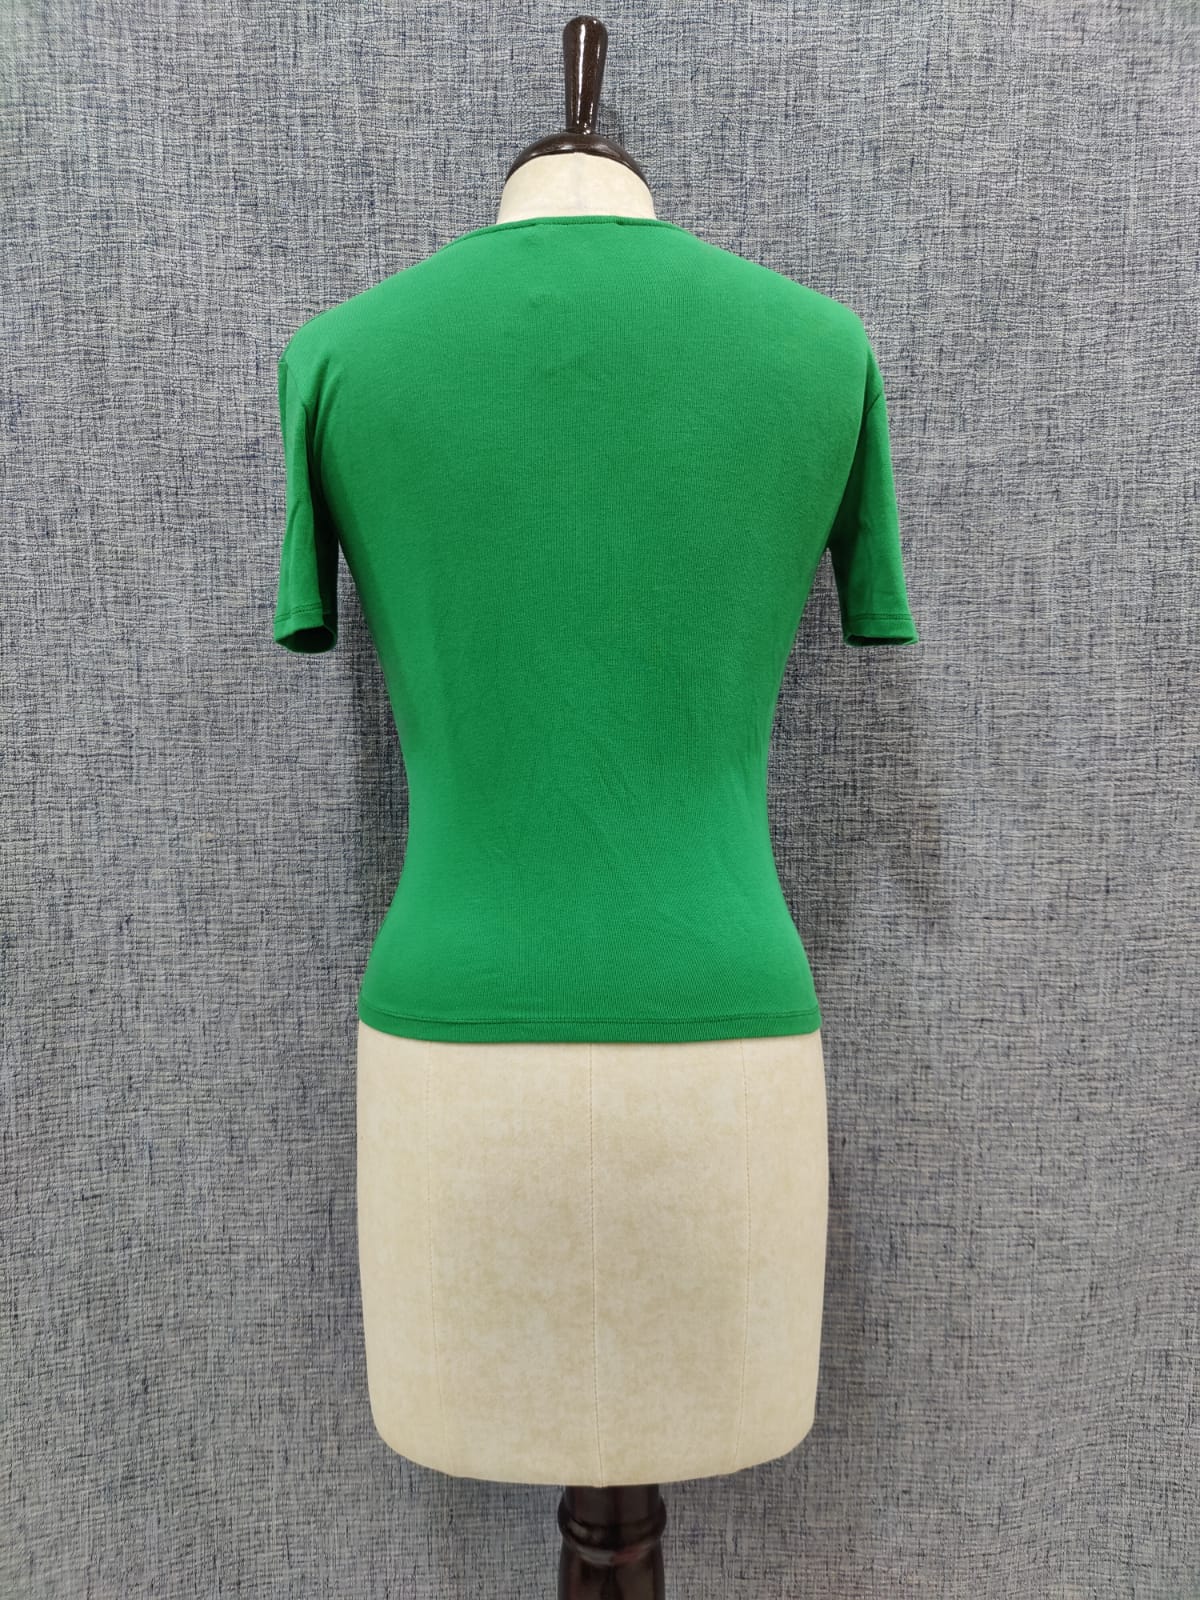 ZARA Green Knit Knotted V-neck Top | Relove